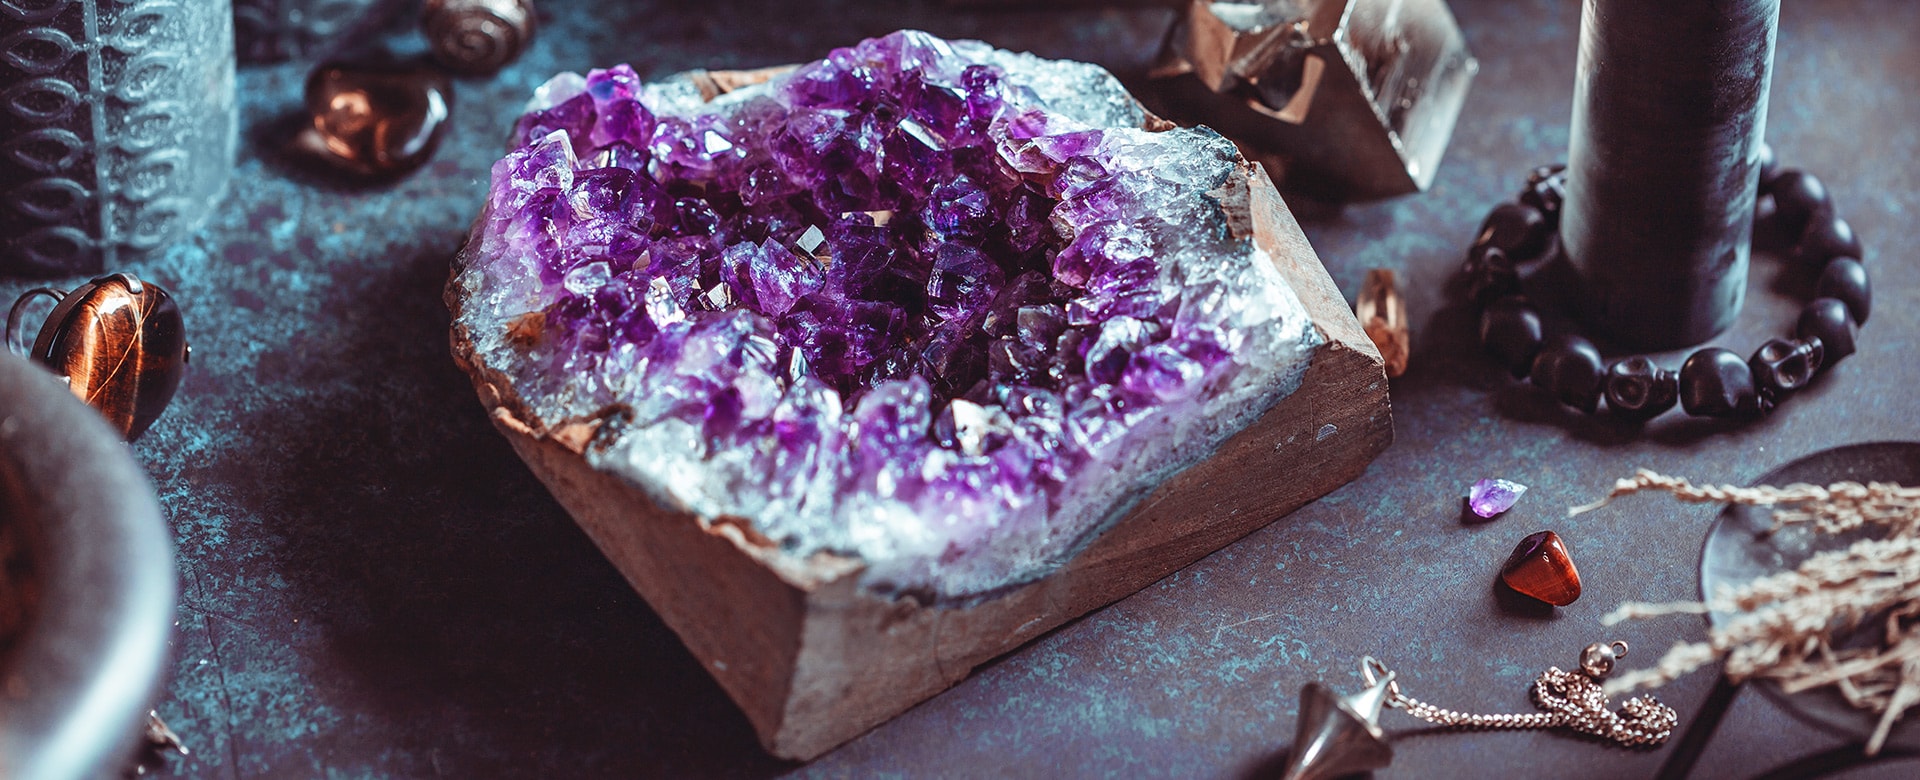 purple amethyst meaning